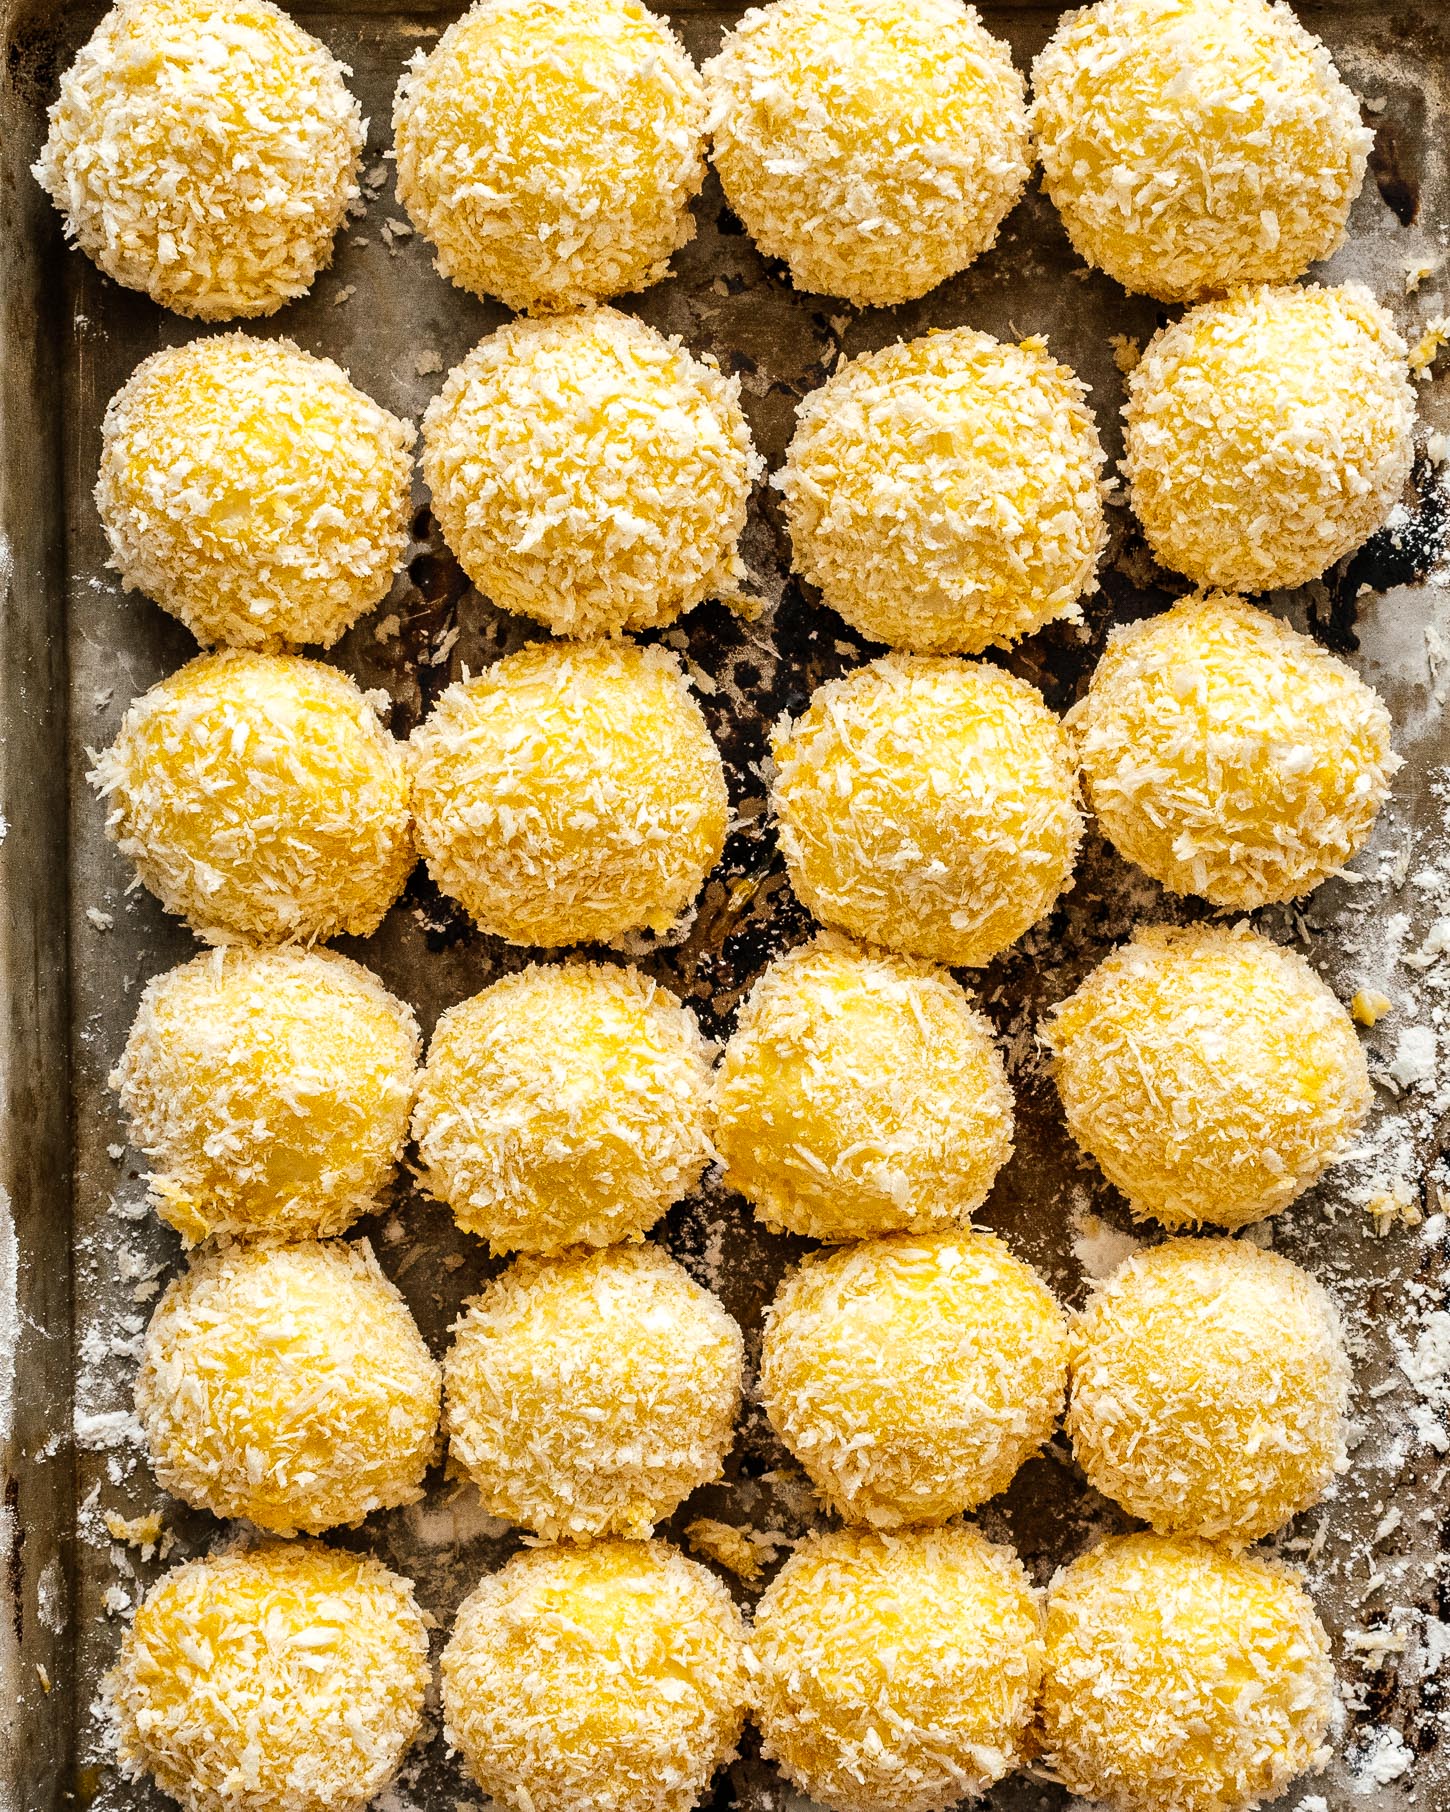 How to make Cheesy Potato Balls | www.iamafoodblog.com